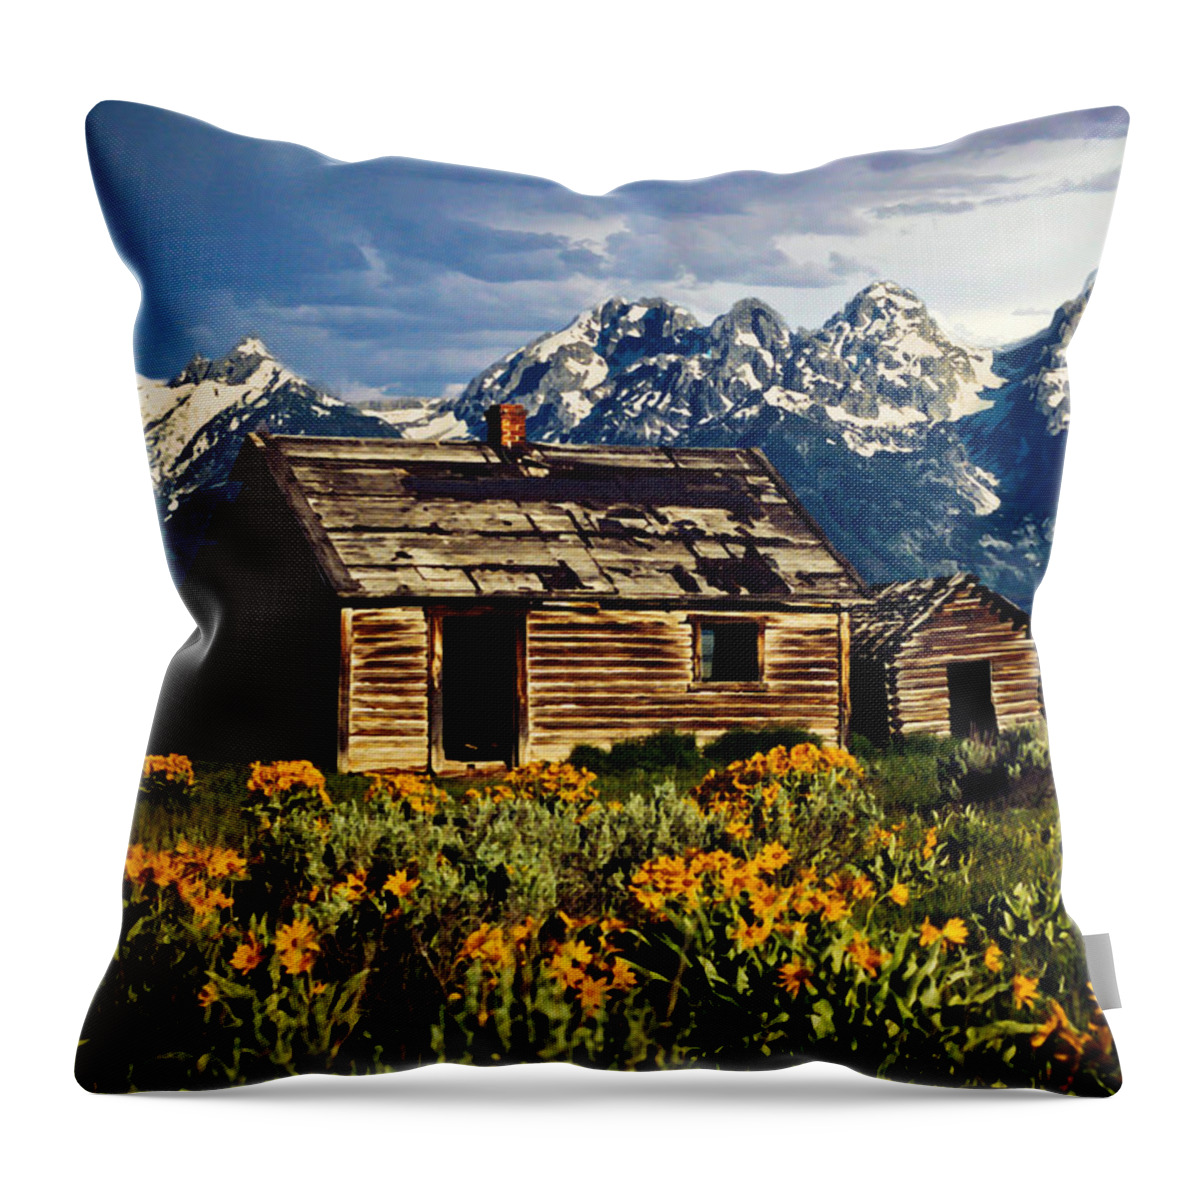 Grand Tetons Throw Pillow featuring the photograph Grand Tetons Cabin by John Haldane